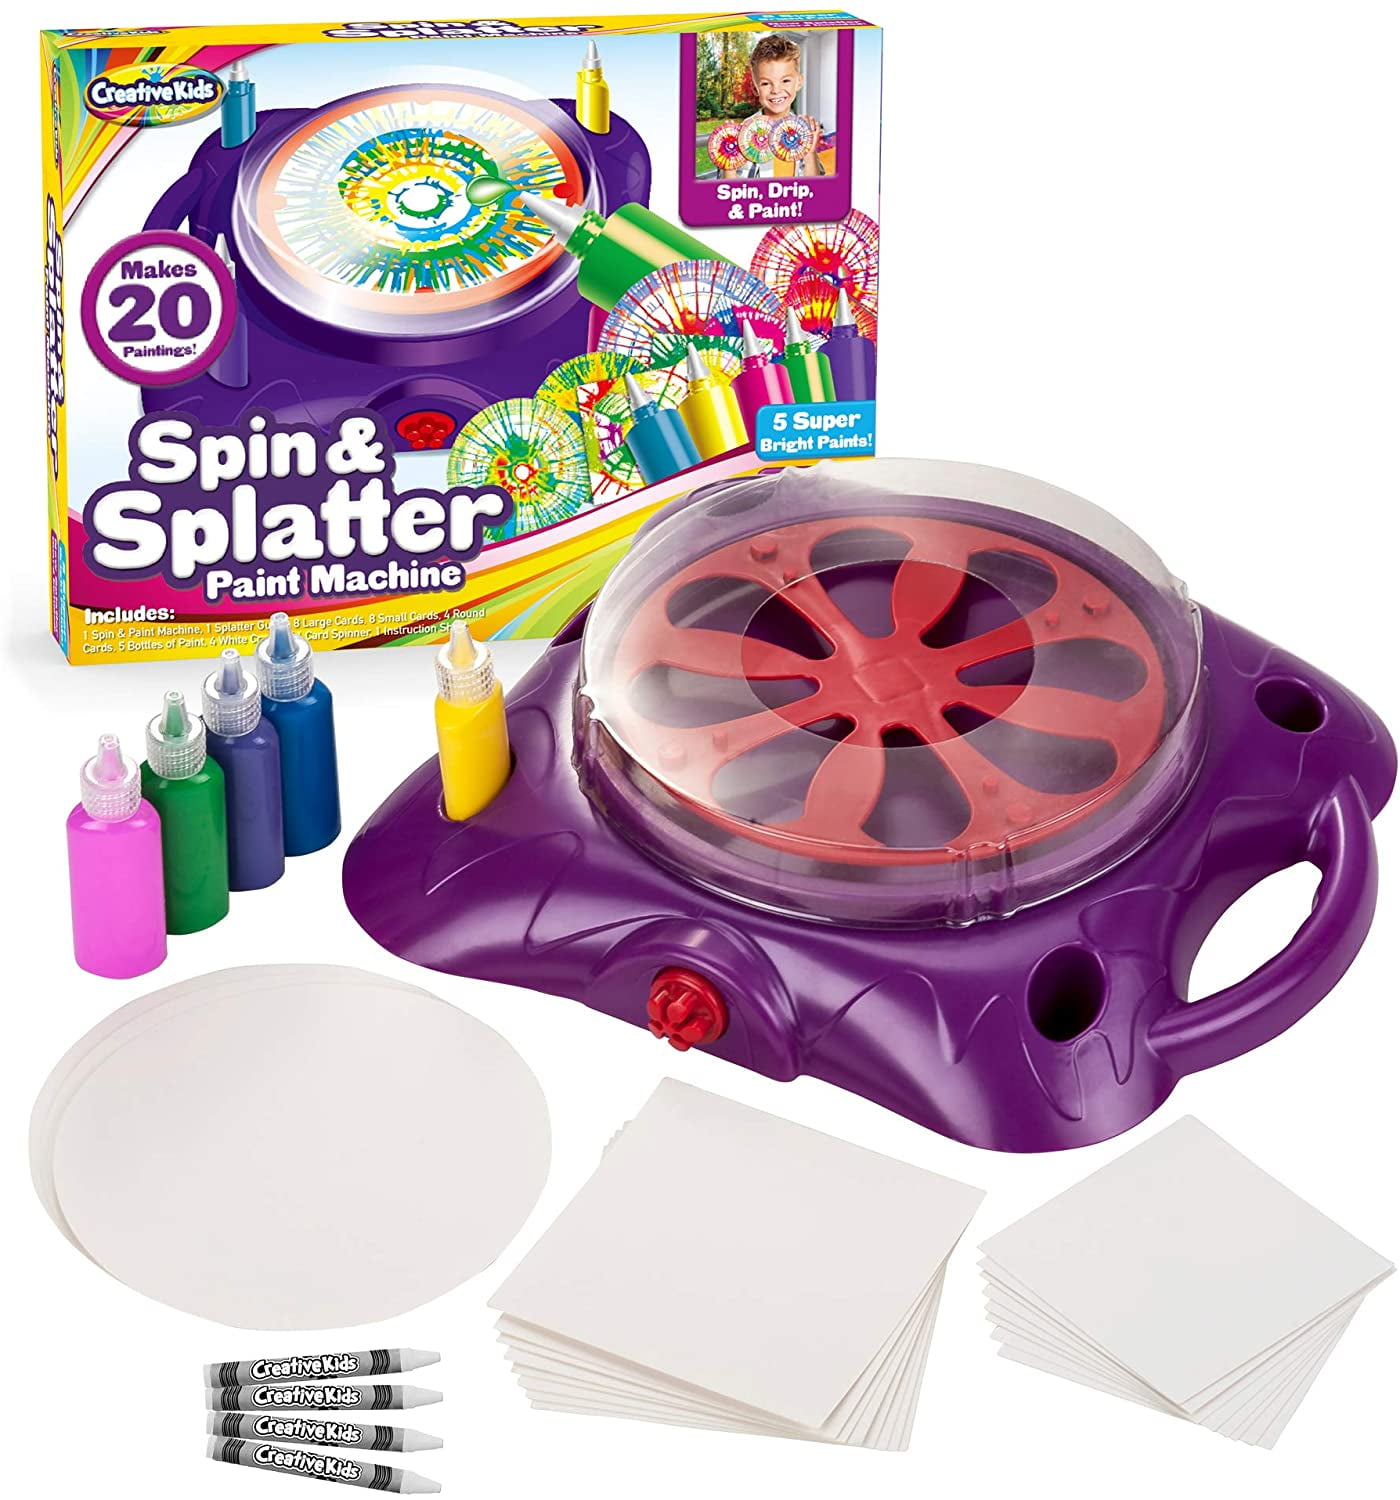  Creative Kids Spin & Paint Art Kit Pro - Advanced